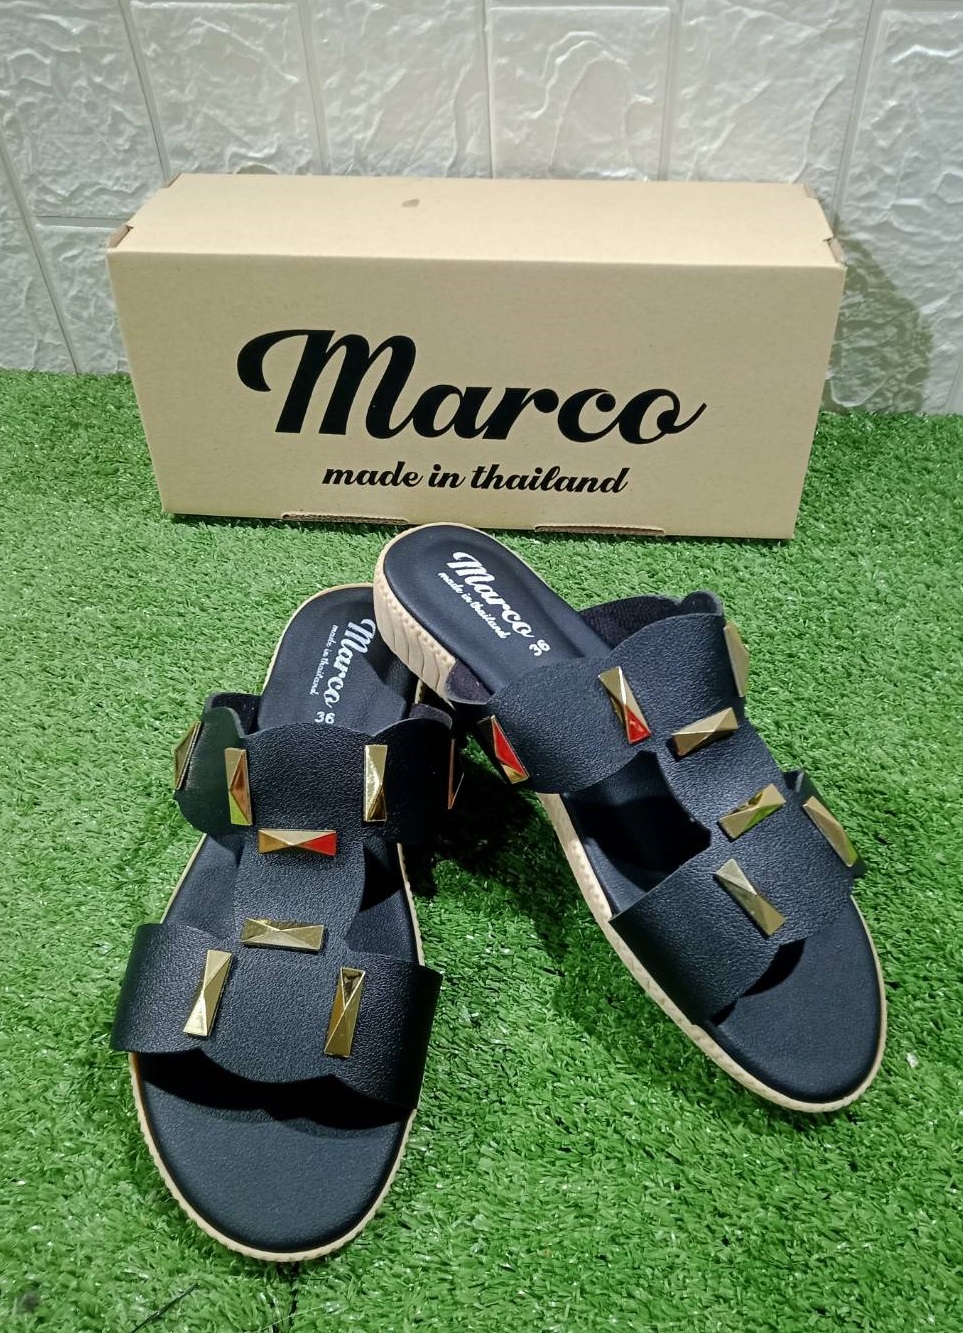 Marco รุ่น T1018 รองเท้าแตะ ลายพีระมิด รองเท้าแตะผู้หญิง รองเท้าแตะกันลื่น สีพื้น รองเท้าใส่ในoffice  นิ่มสบาย เป็น รองเท้าเพื่อสุขภาพ